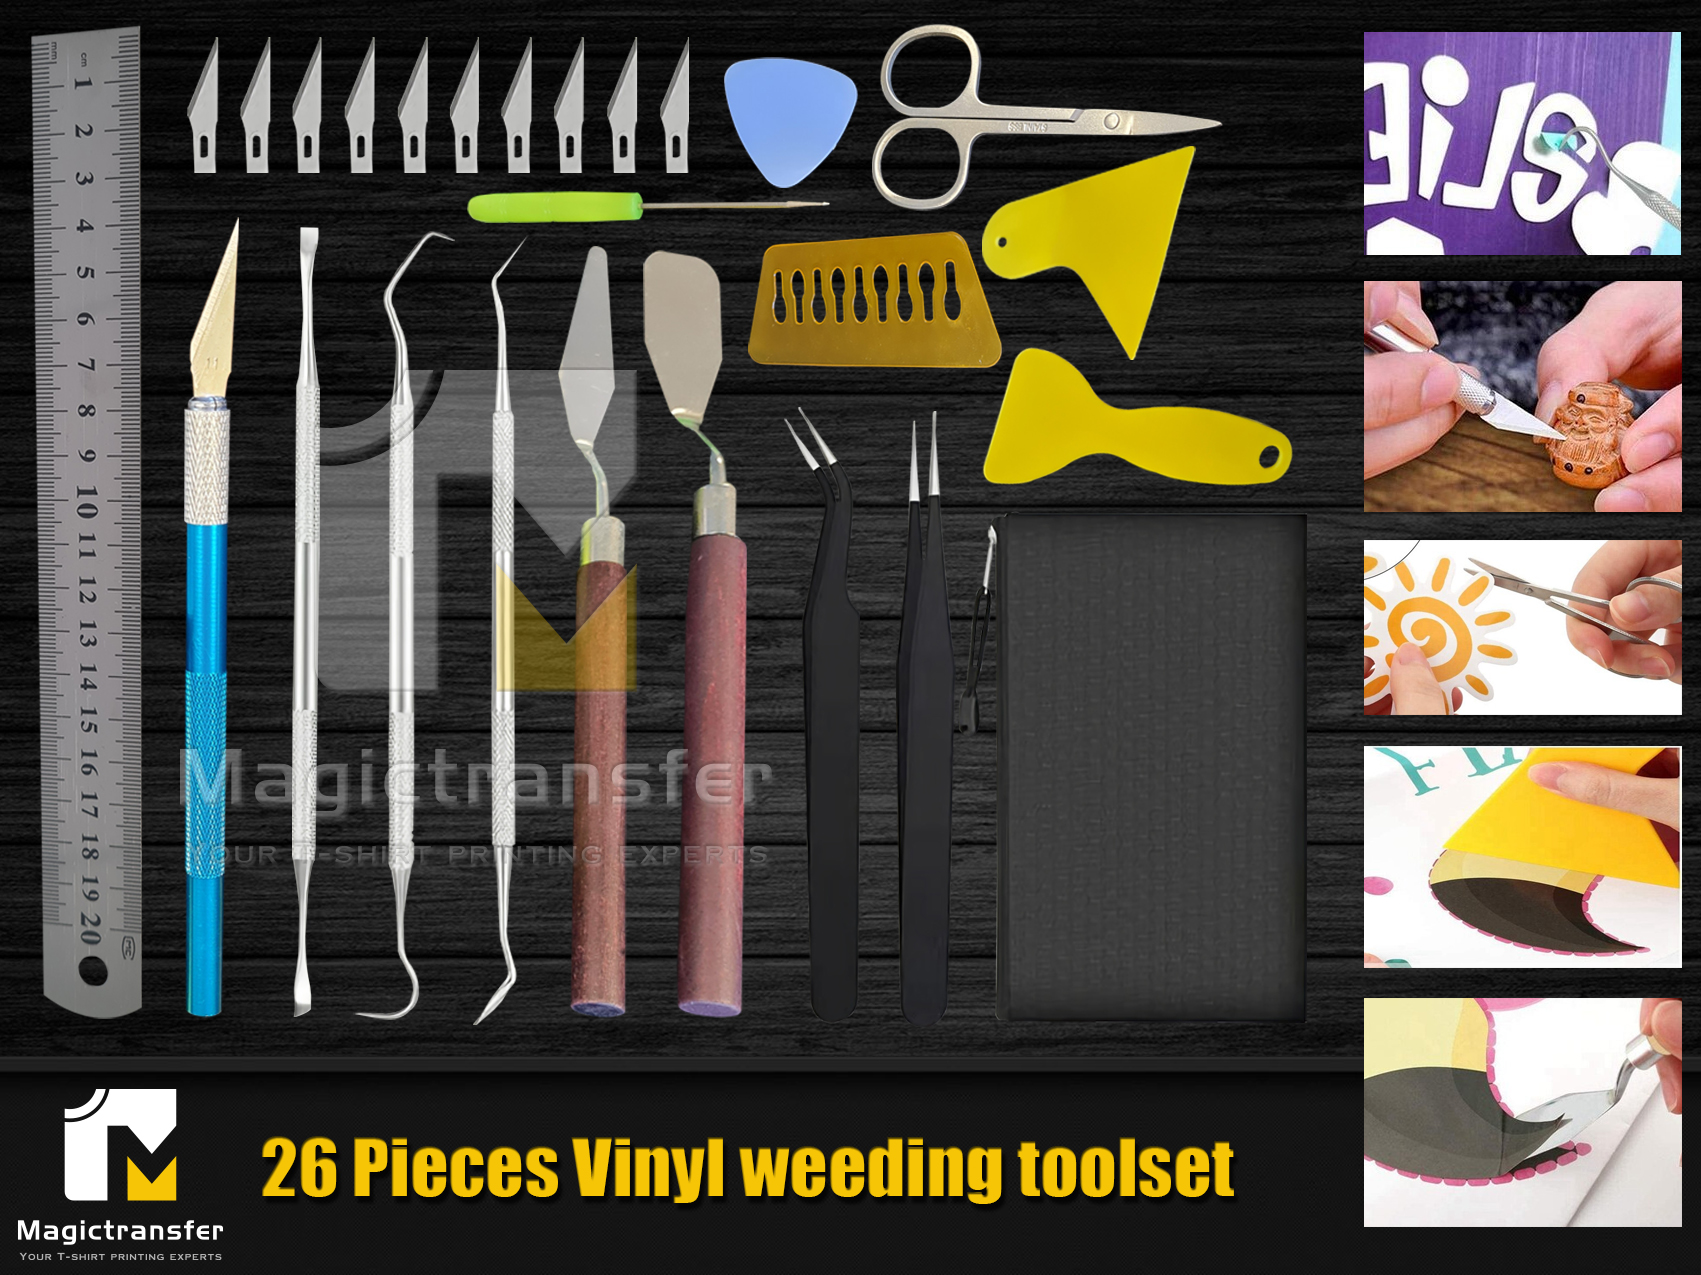 26 pieces Crafts Vinyl Weeding Tool set - Magic Transfer